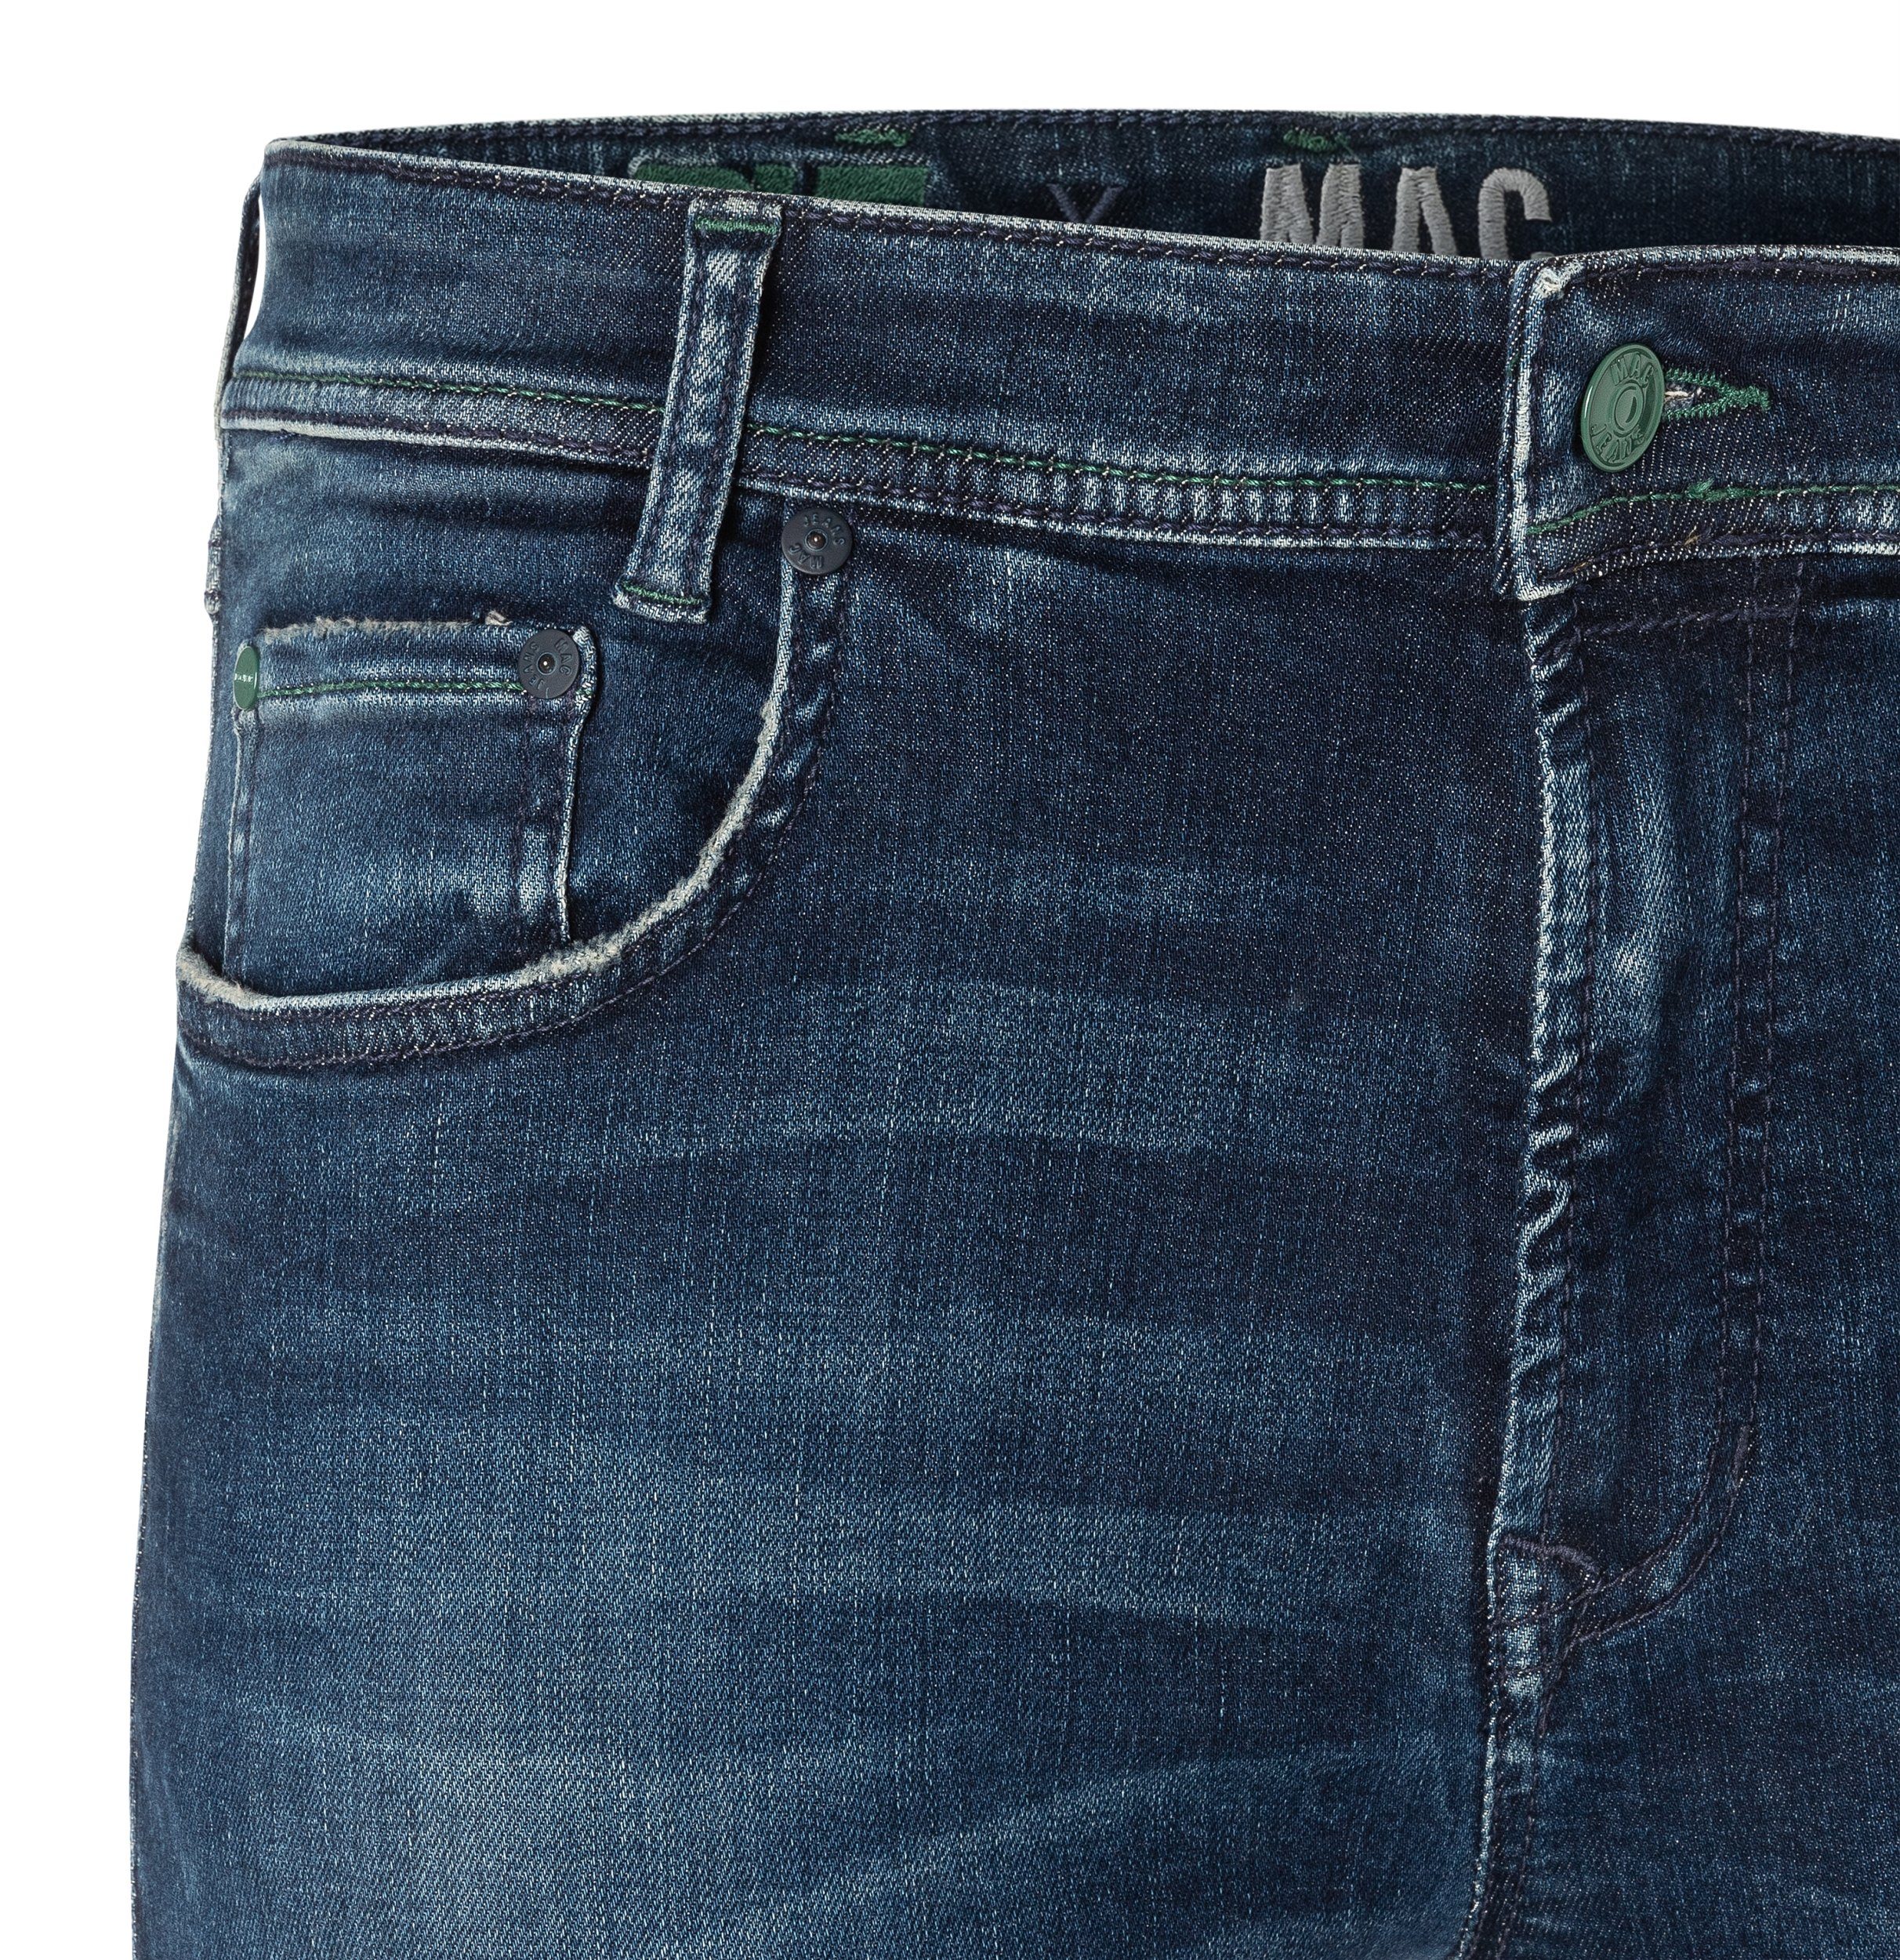 authentic 5-Pocket-Jeans MAC used MacFlexx blue dark